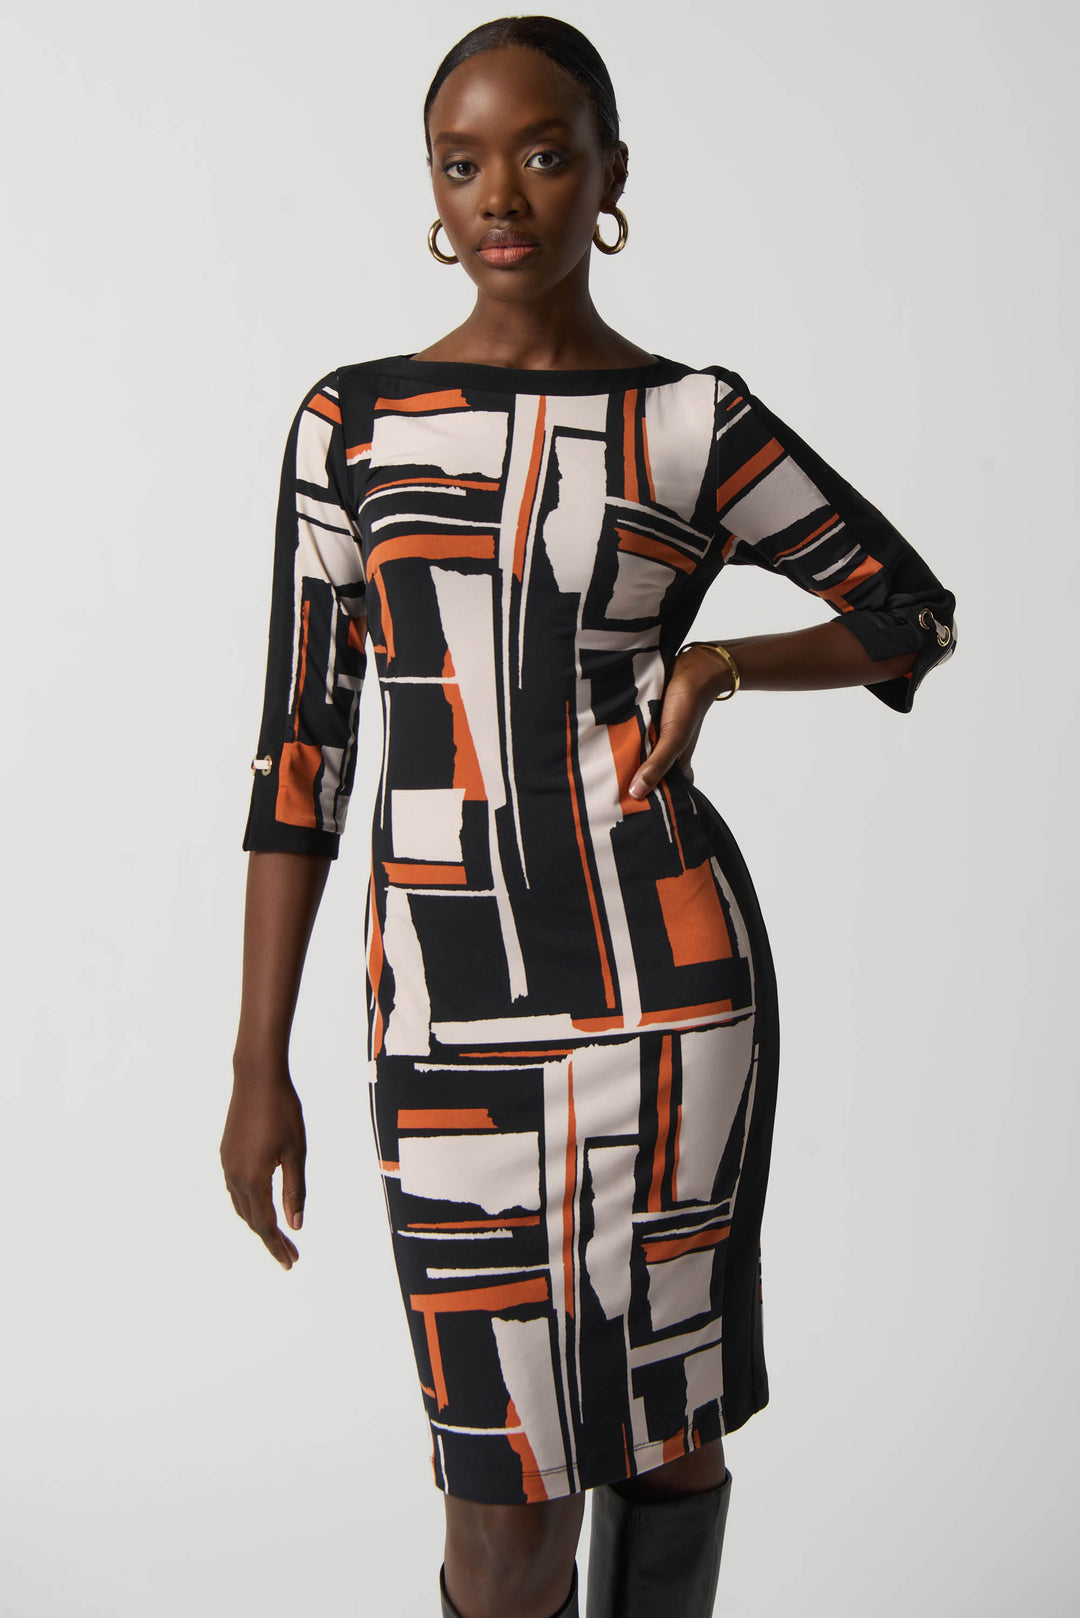 "Joseph Ribkoff Black/Multi Geometric Print Sheath Dress Style 233173"